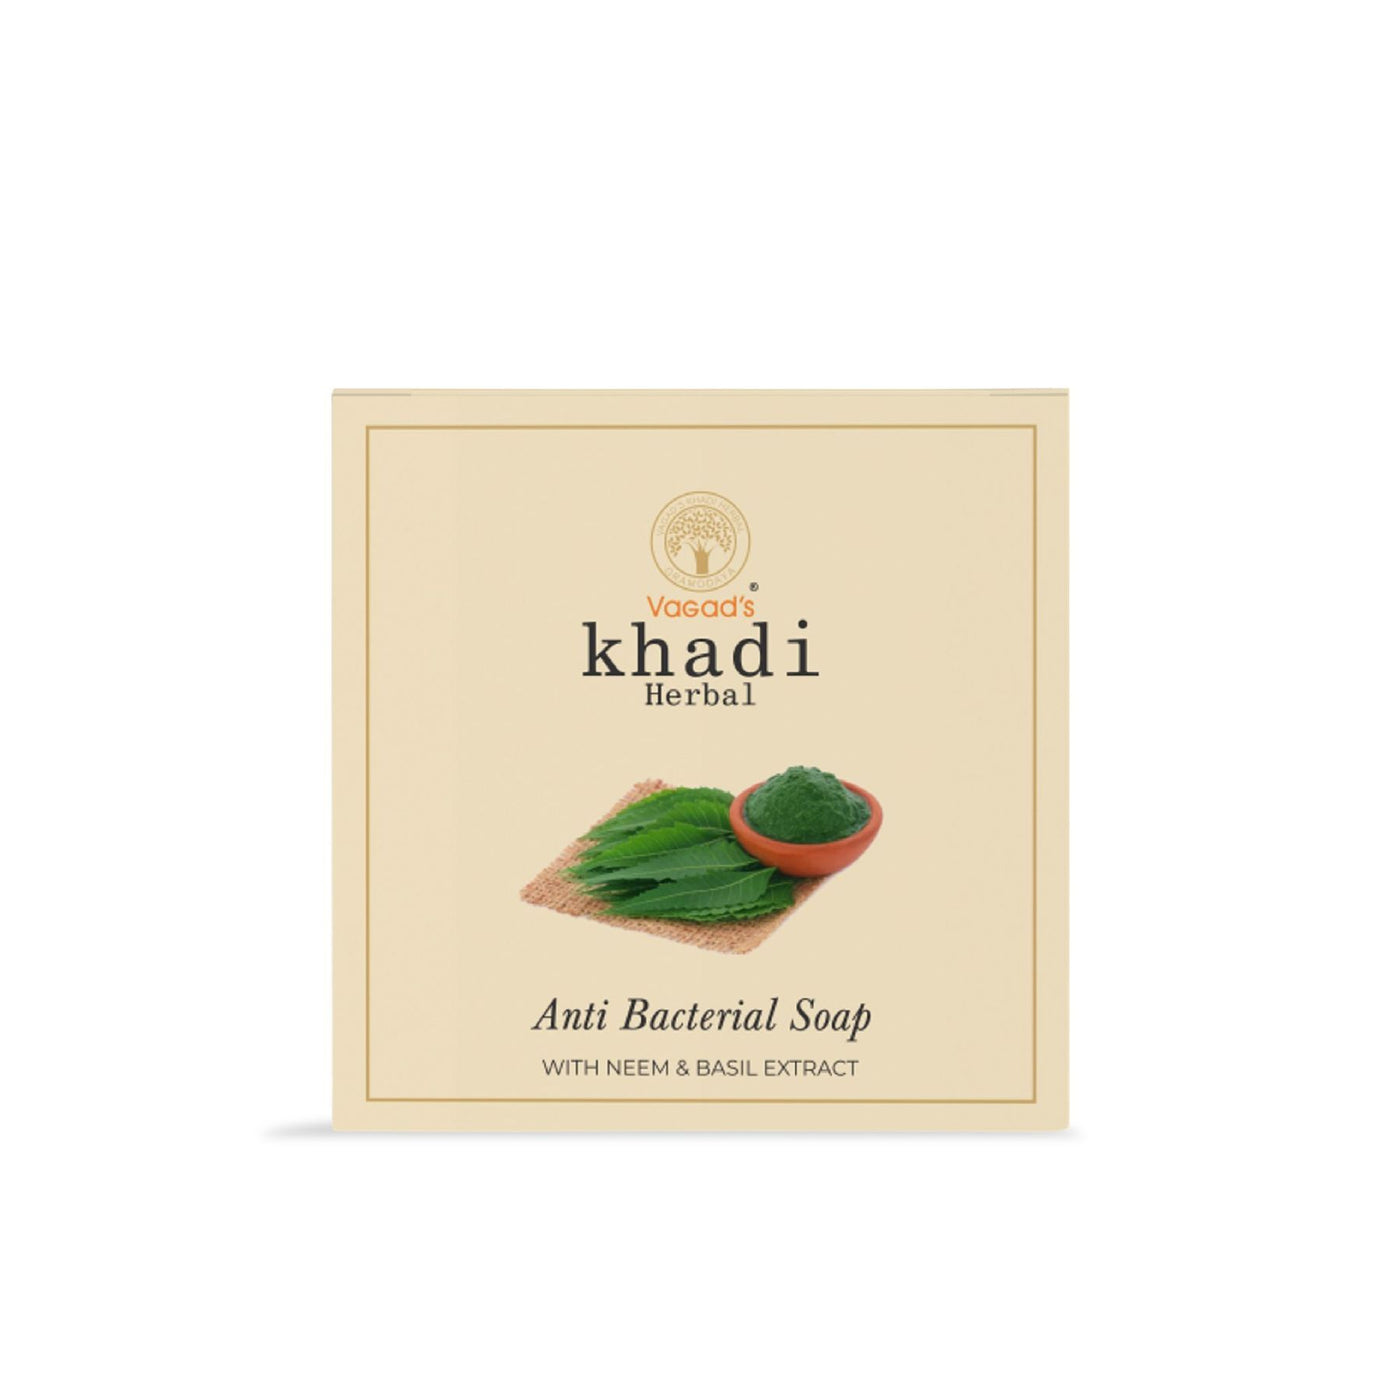 Vagad's Khadi Anti-Bacterial Soap (Pack of 3)